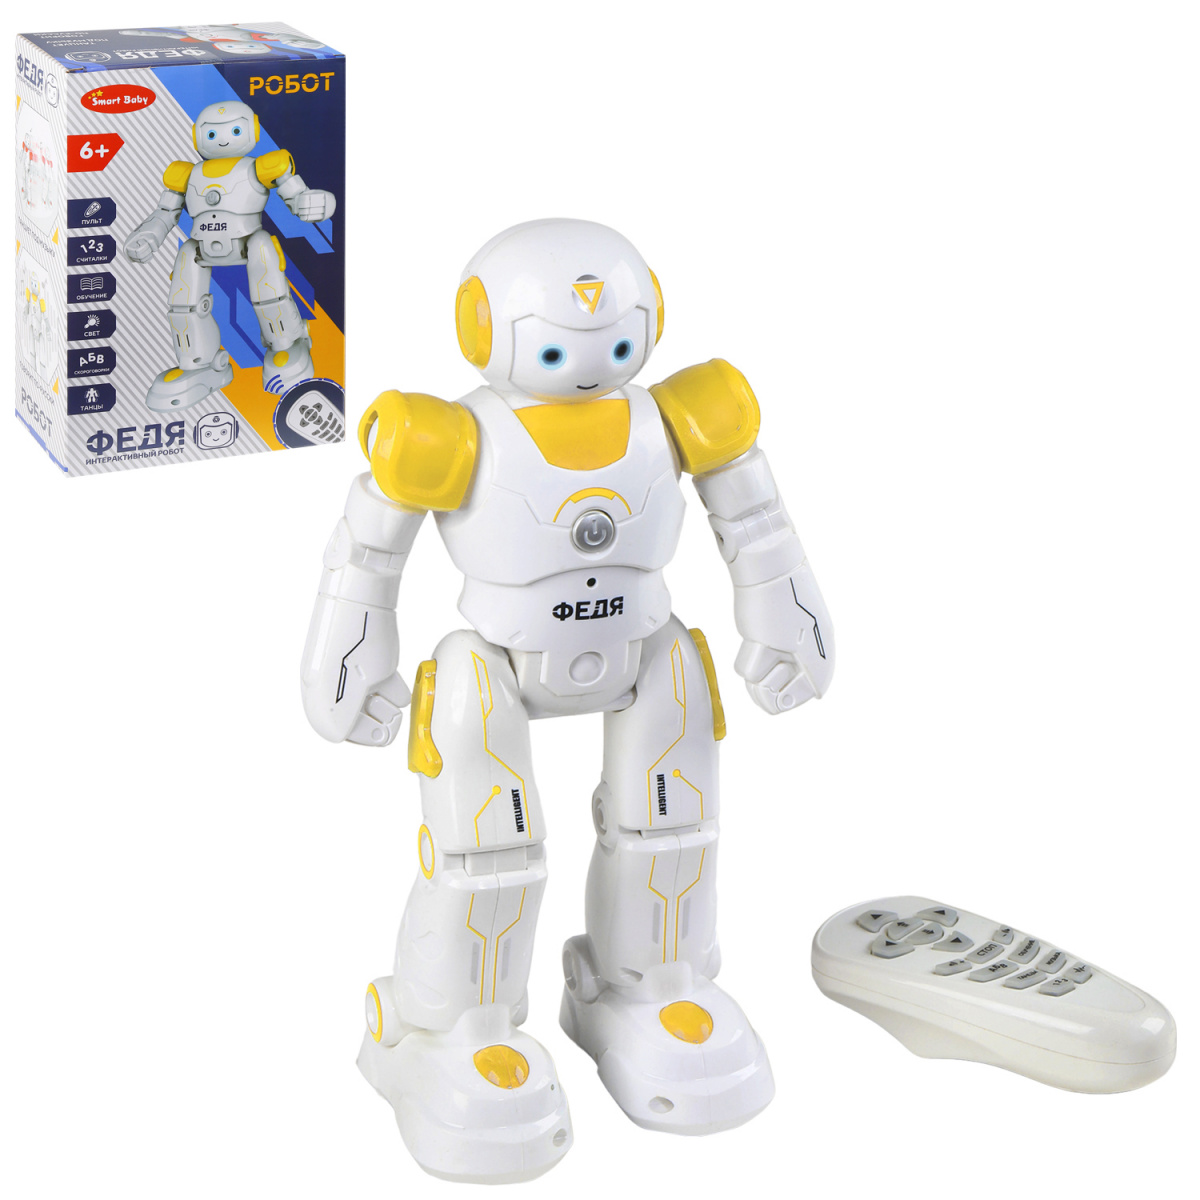 Робот р/у JB0402925 "Smart Baby", робот Федя, свет, звук